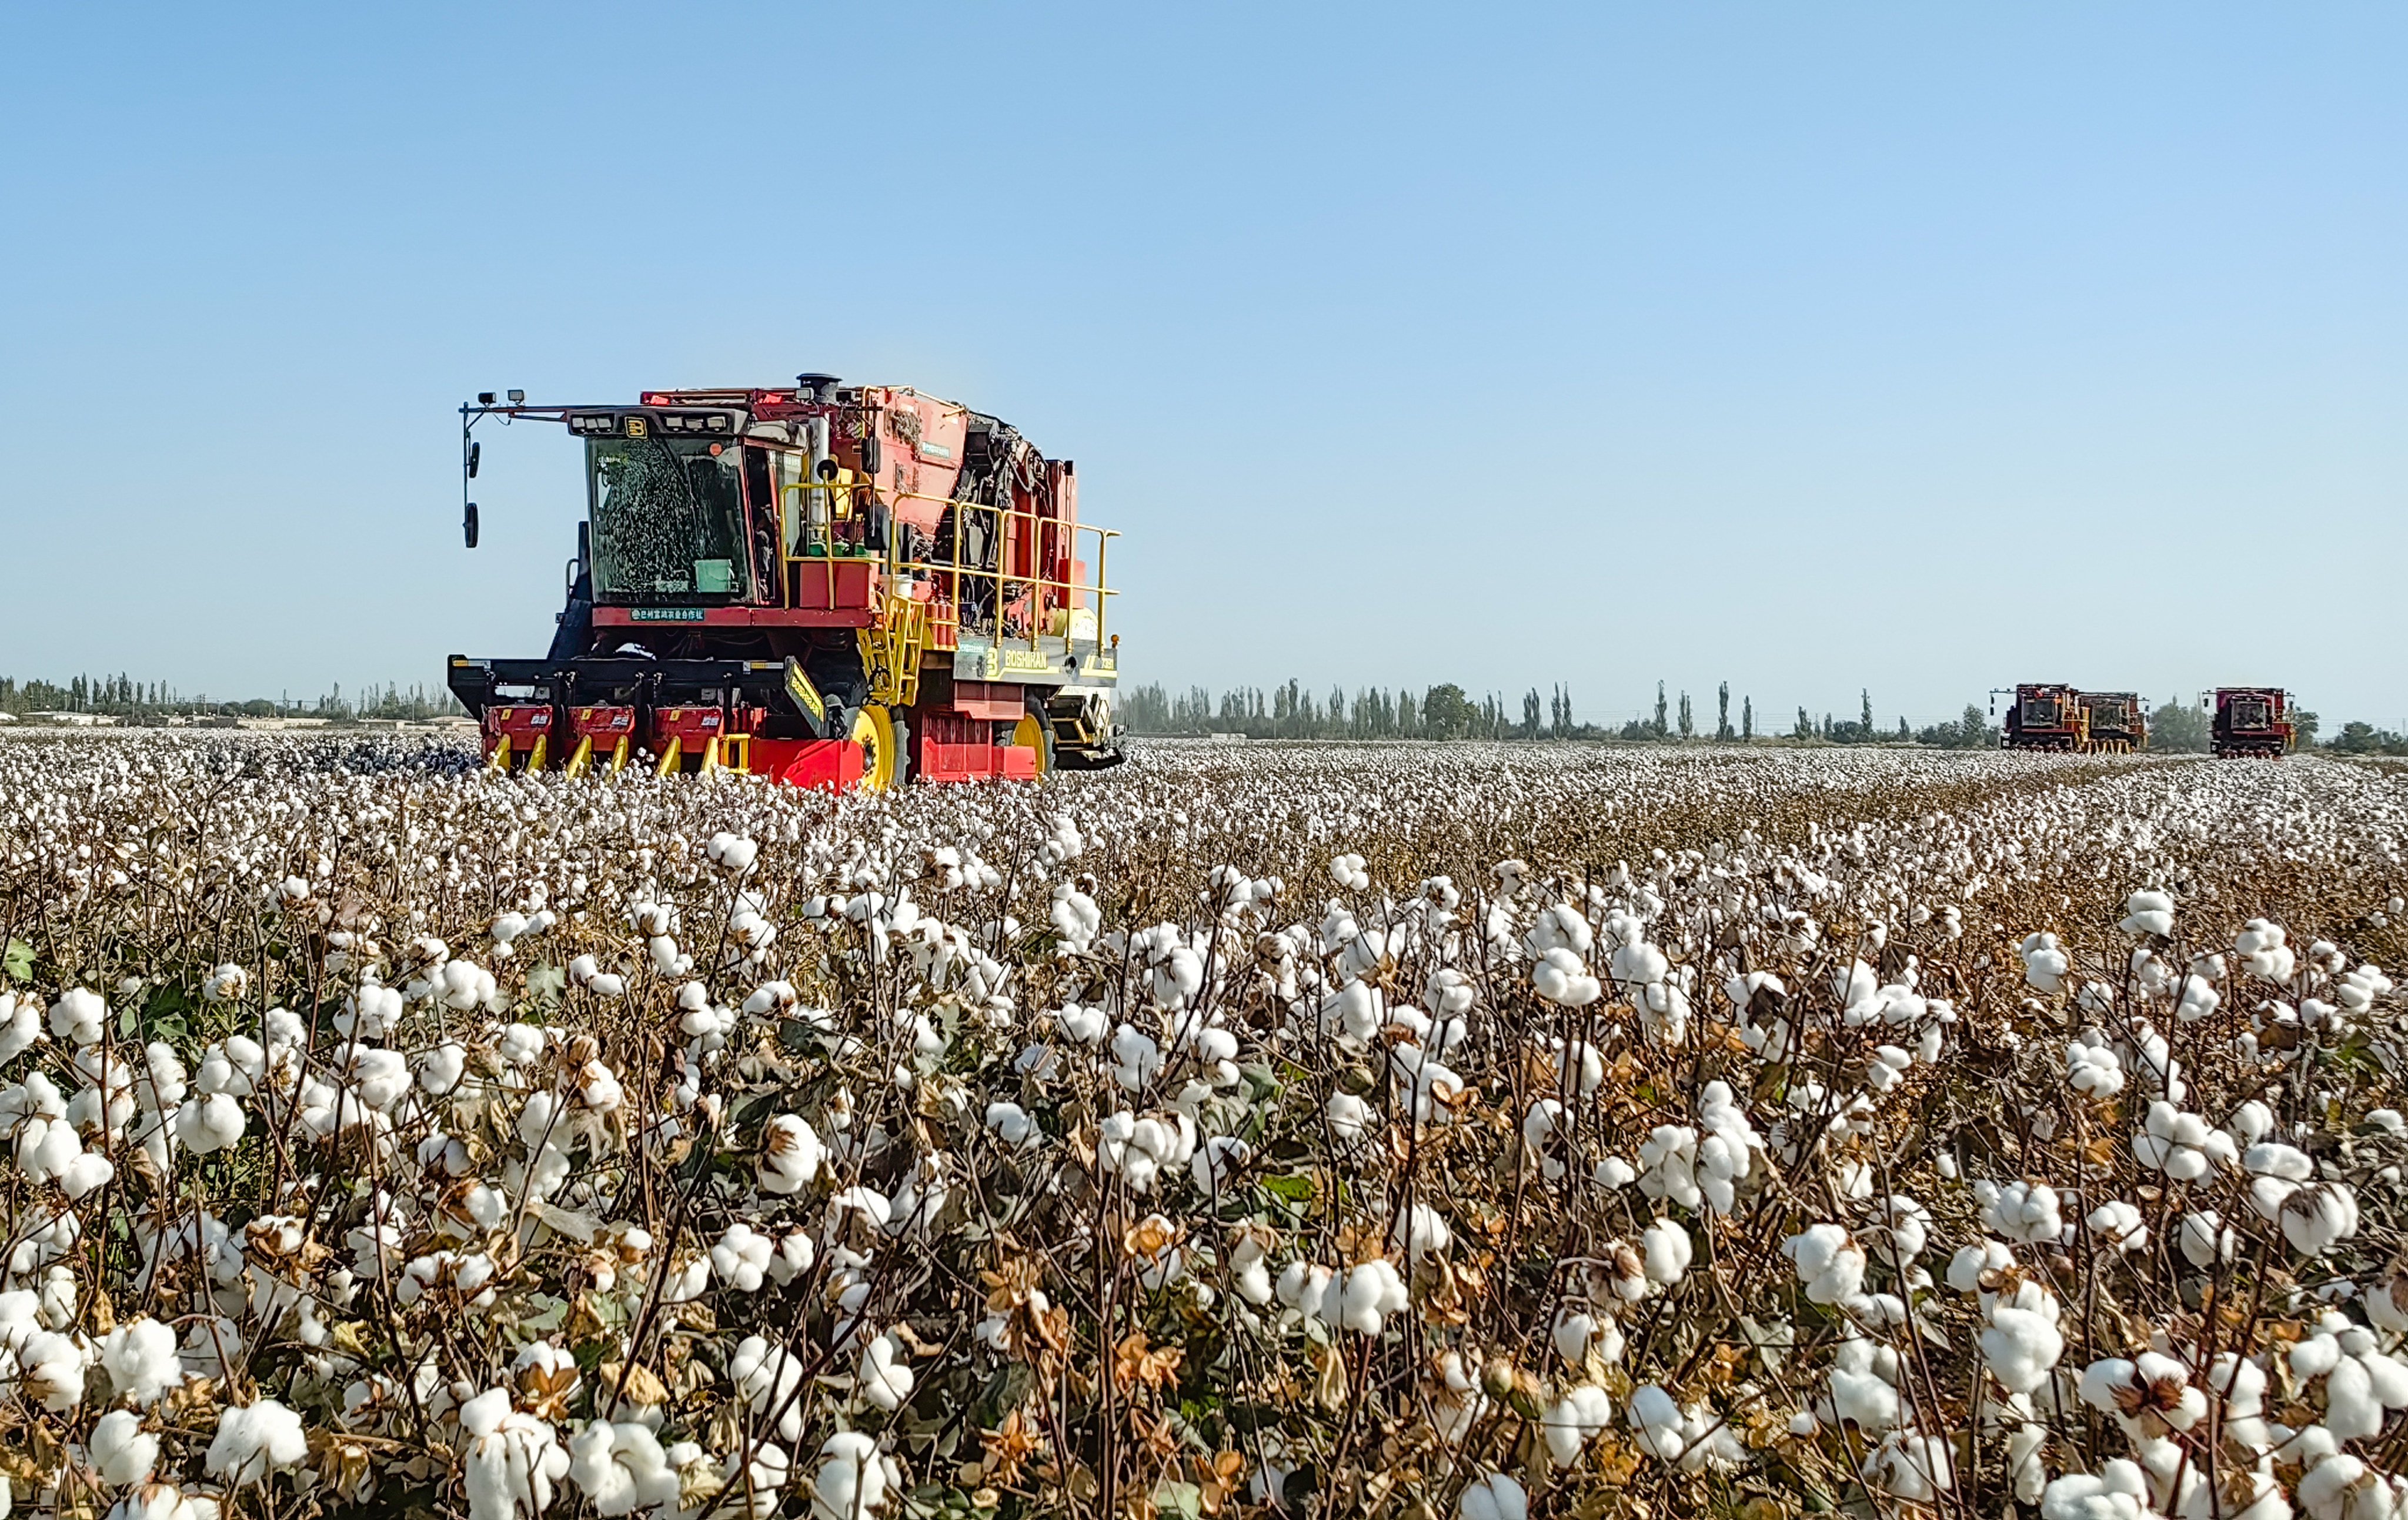 Farmers harvesting cotton in northwest China’s Xinjiang region. Photo: Xinhua